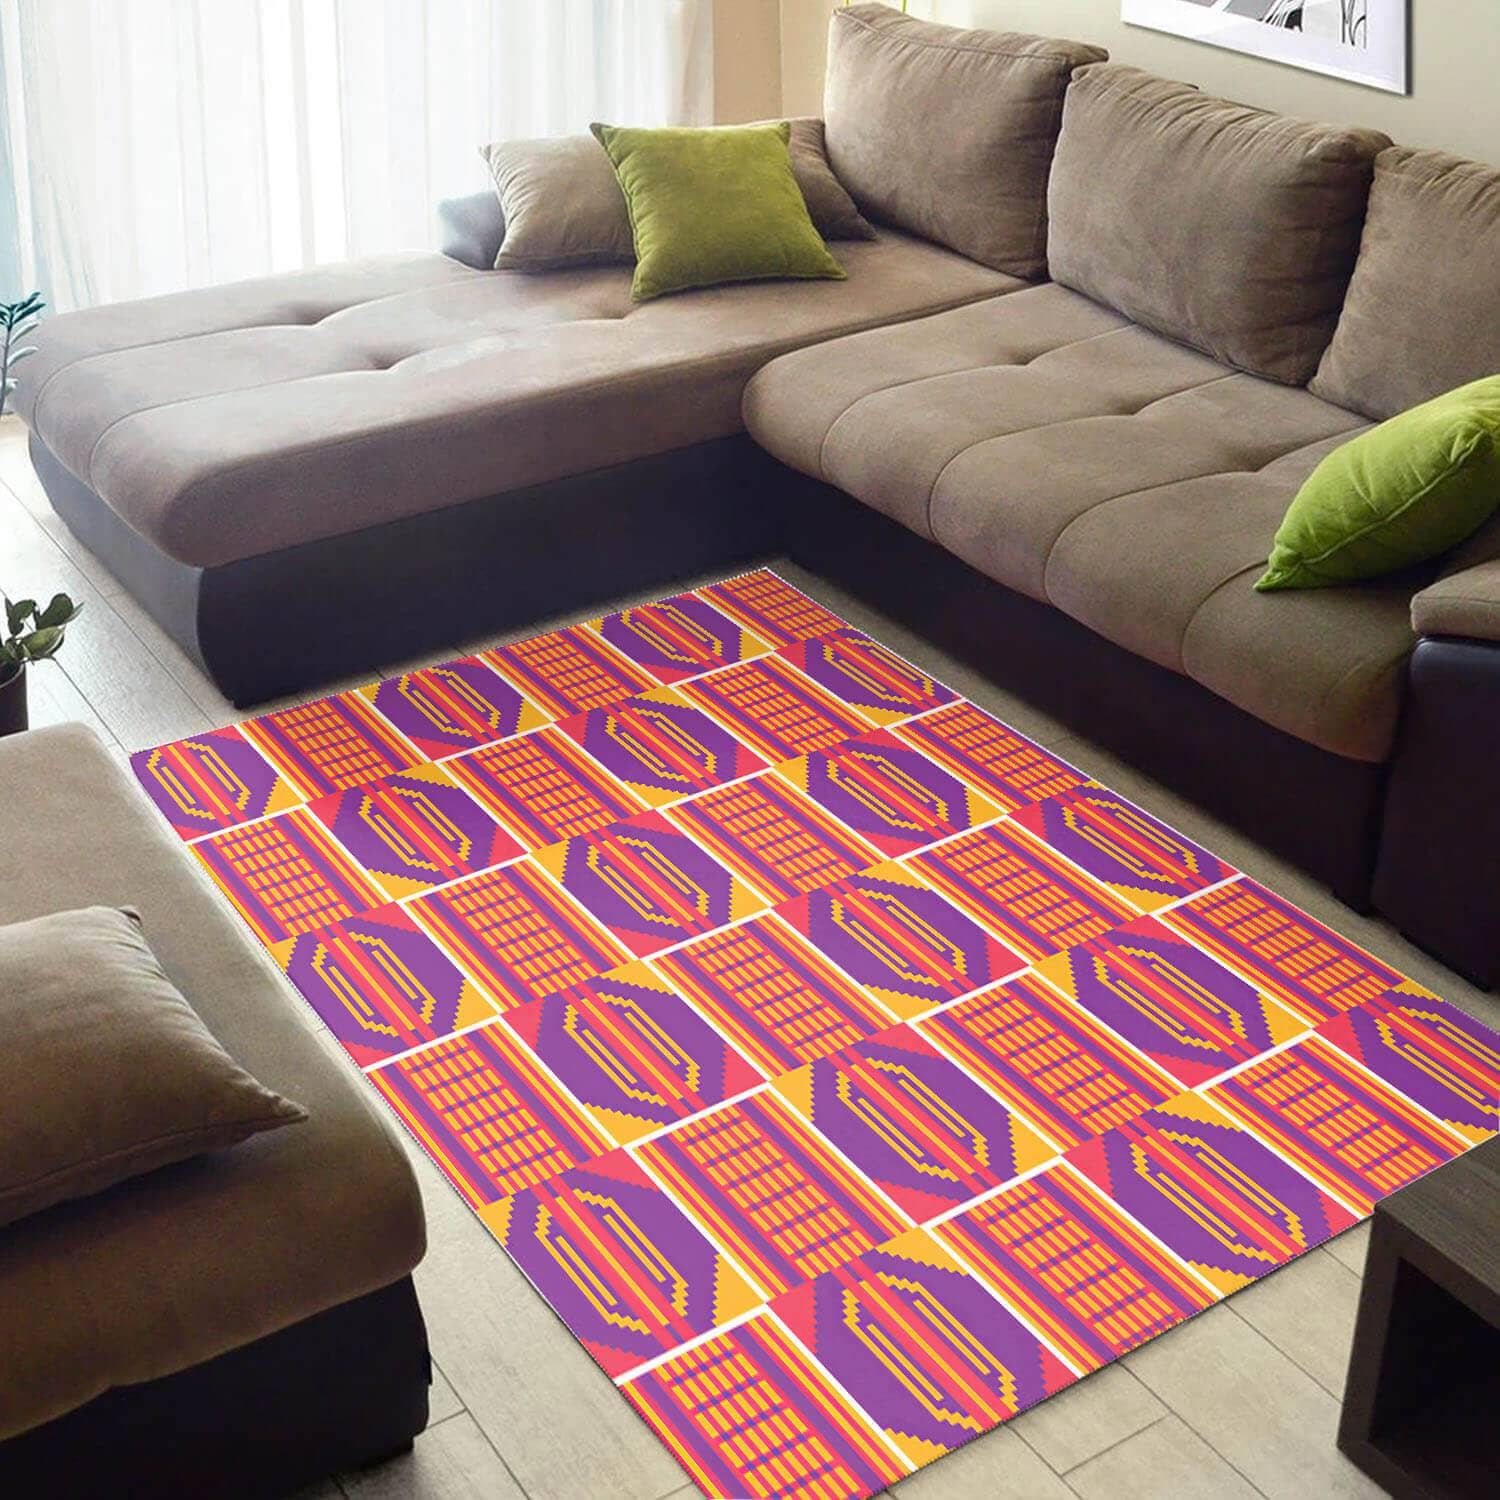 Cool African Unique Ethnic Seamless Pattern Design Floor Carpet Room Rug